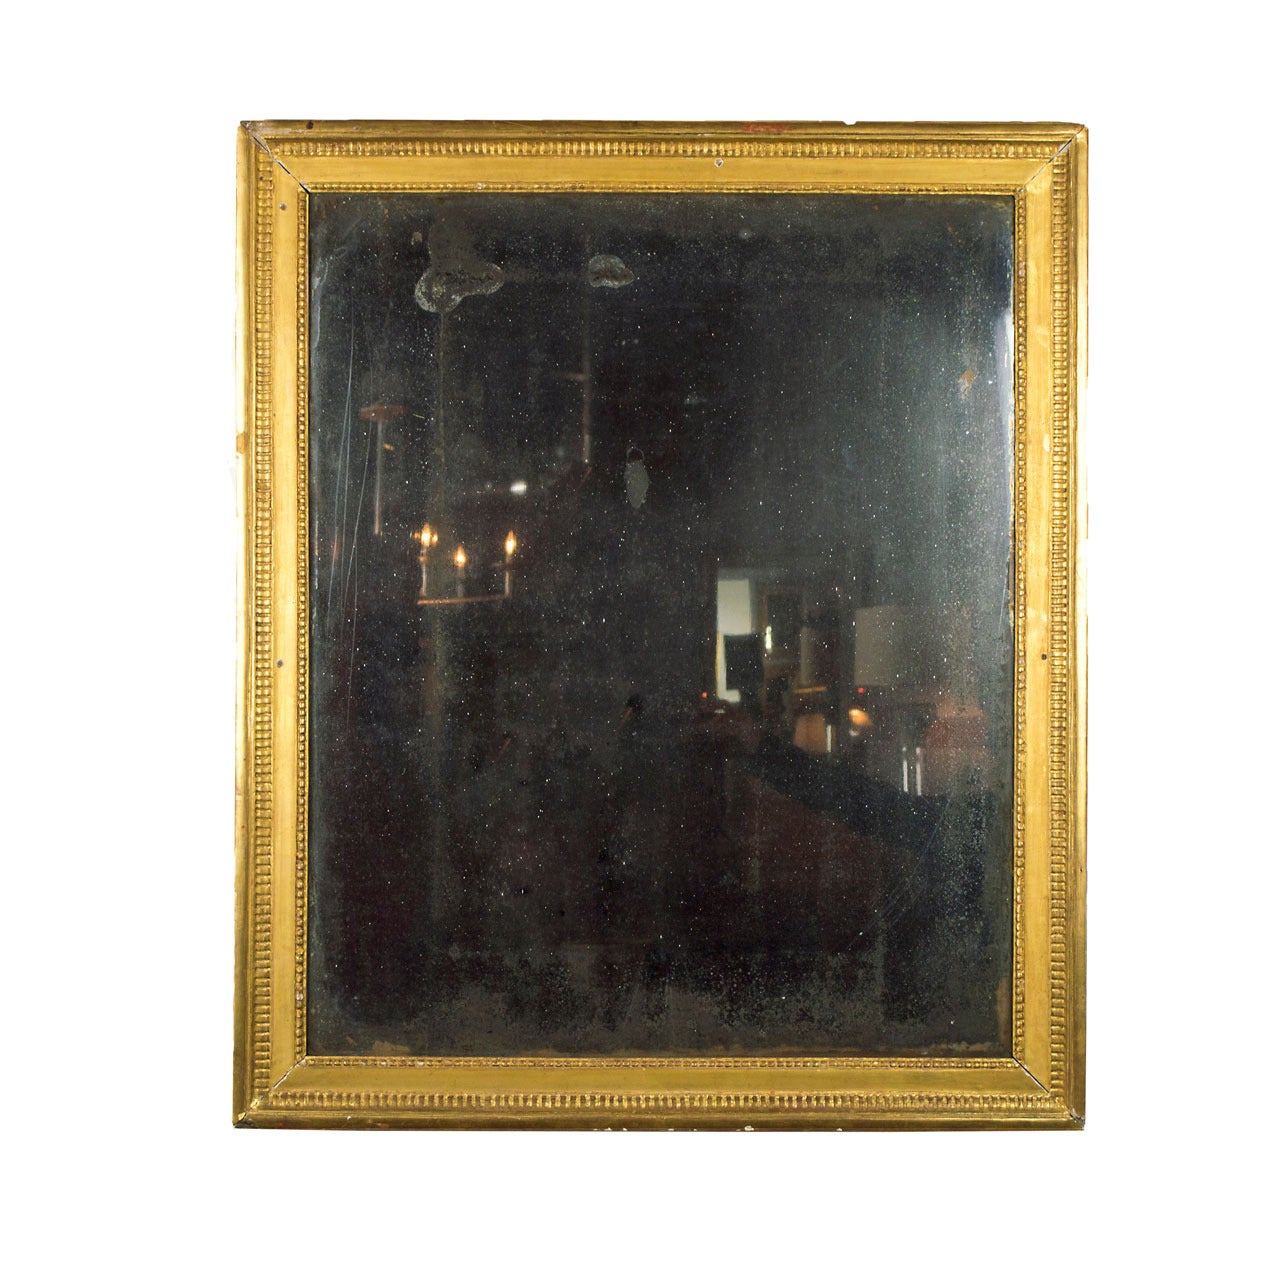 19th Century French Mirror